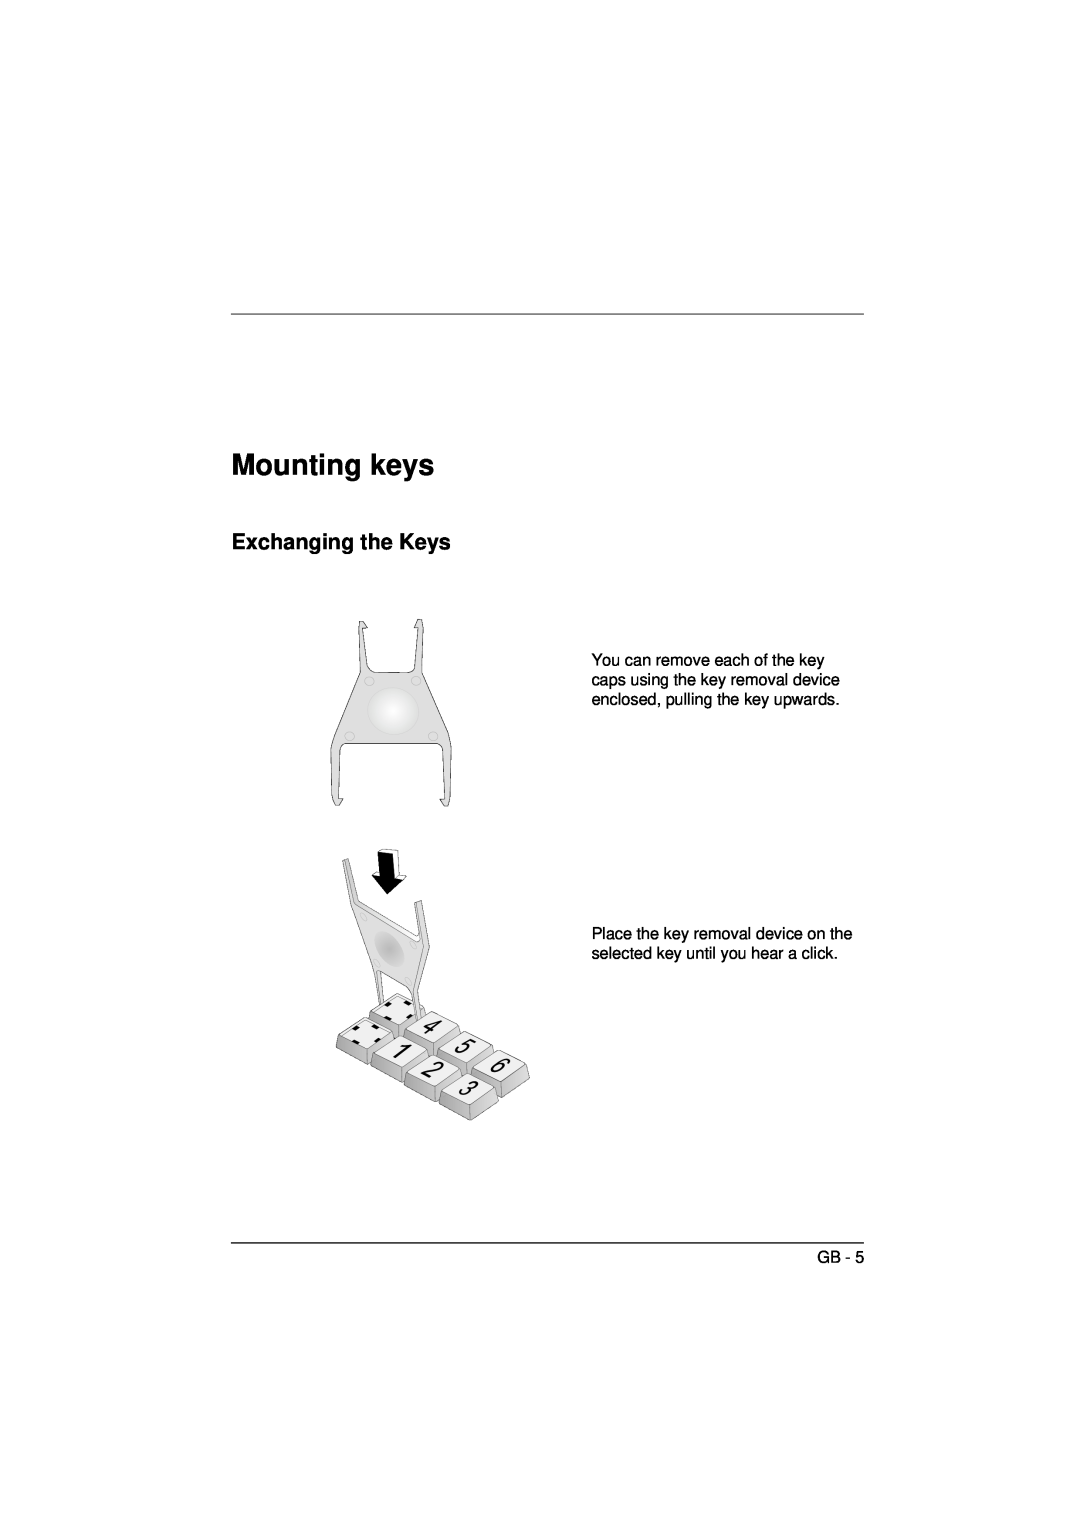 Microsoft TA61 manual Mounting keys, Exchanging the Keys 